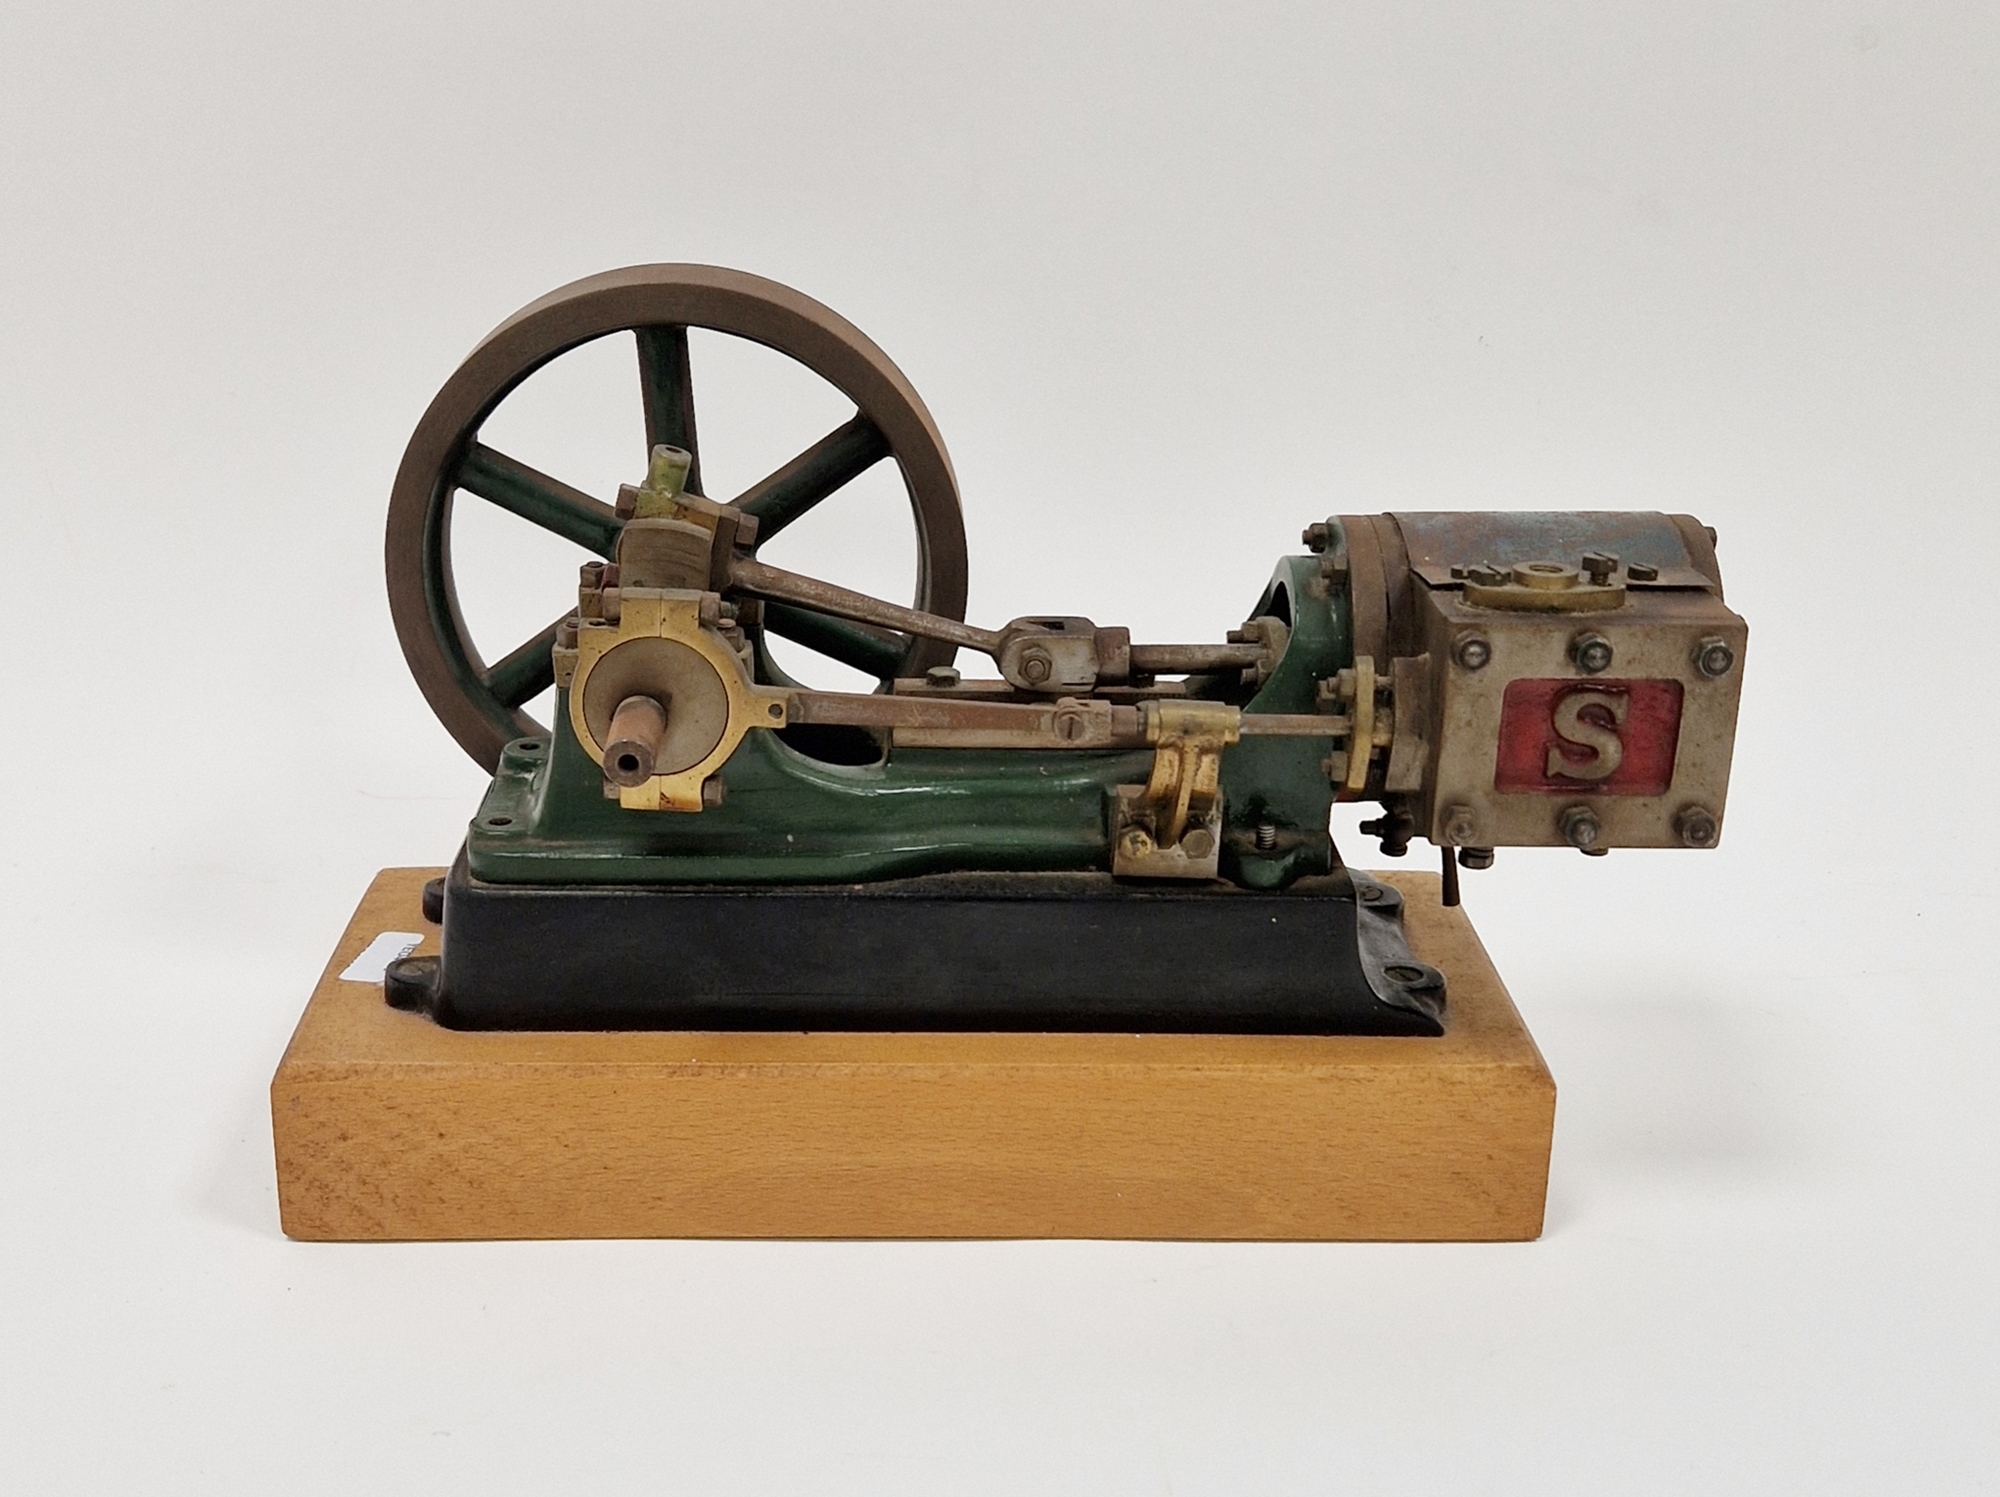 Model, stationary single cylinder steam engine by Stuart, on a wooden base, 20cm long - Image 2 of 2